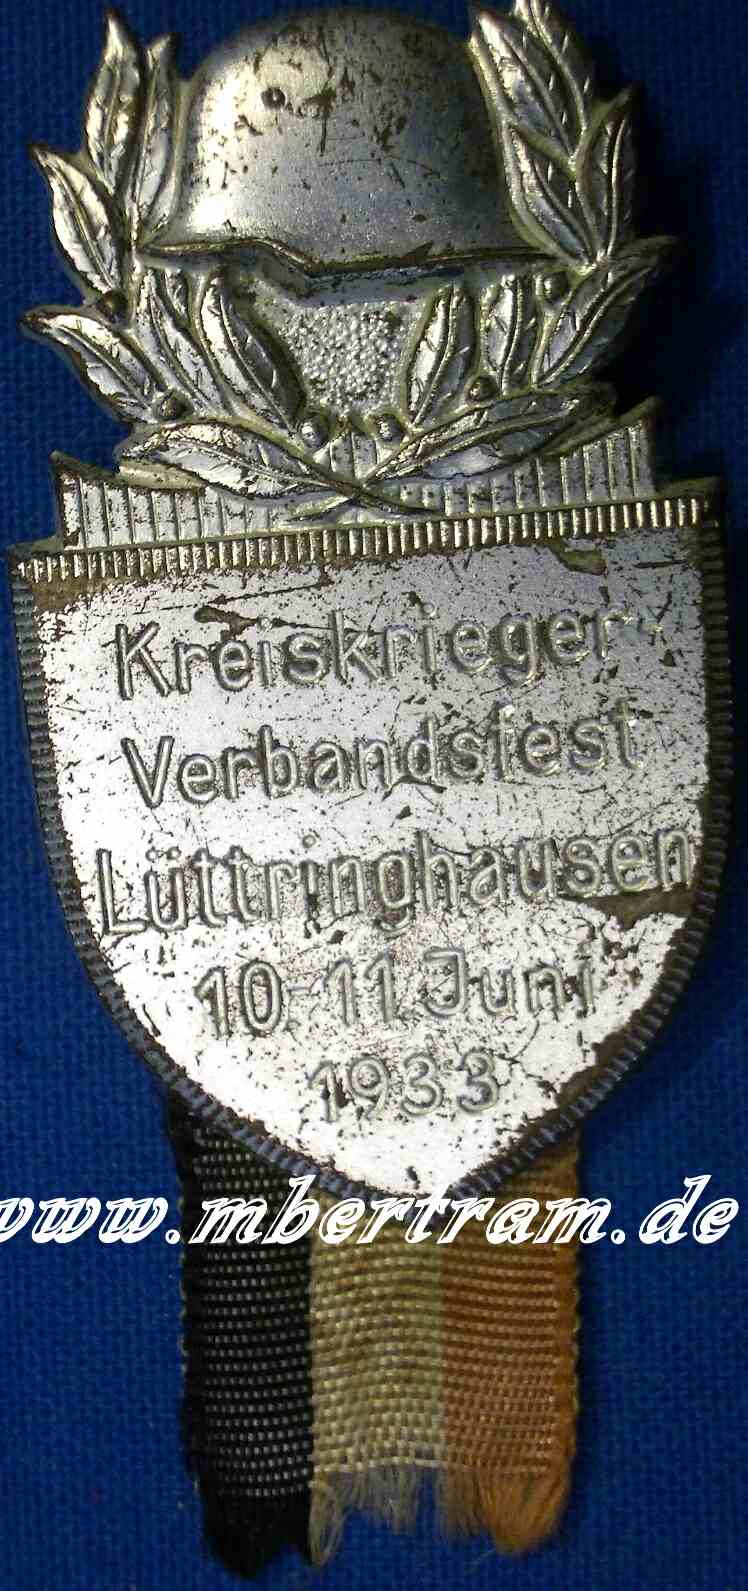 Kreiskrieger Verbandsfest Lüttringhausen 10.-11.06.1933